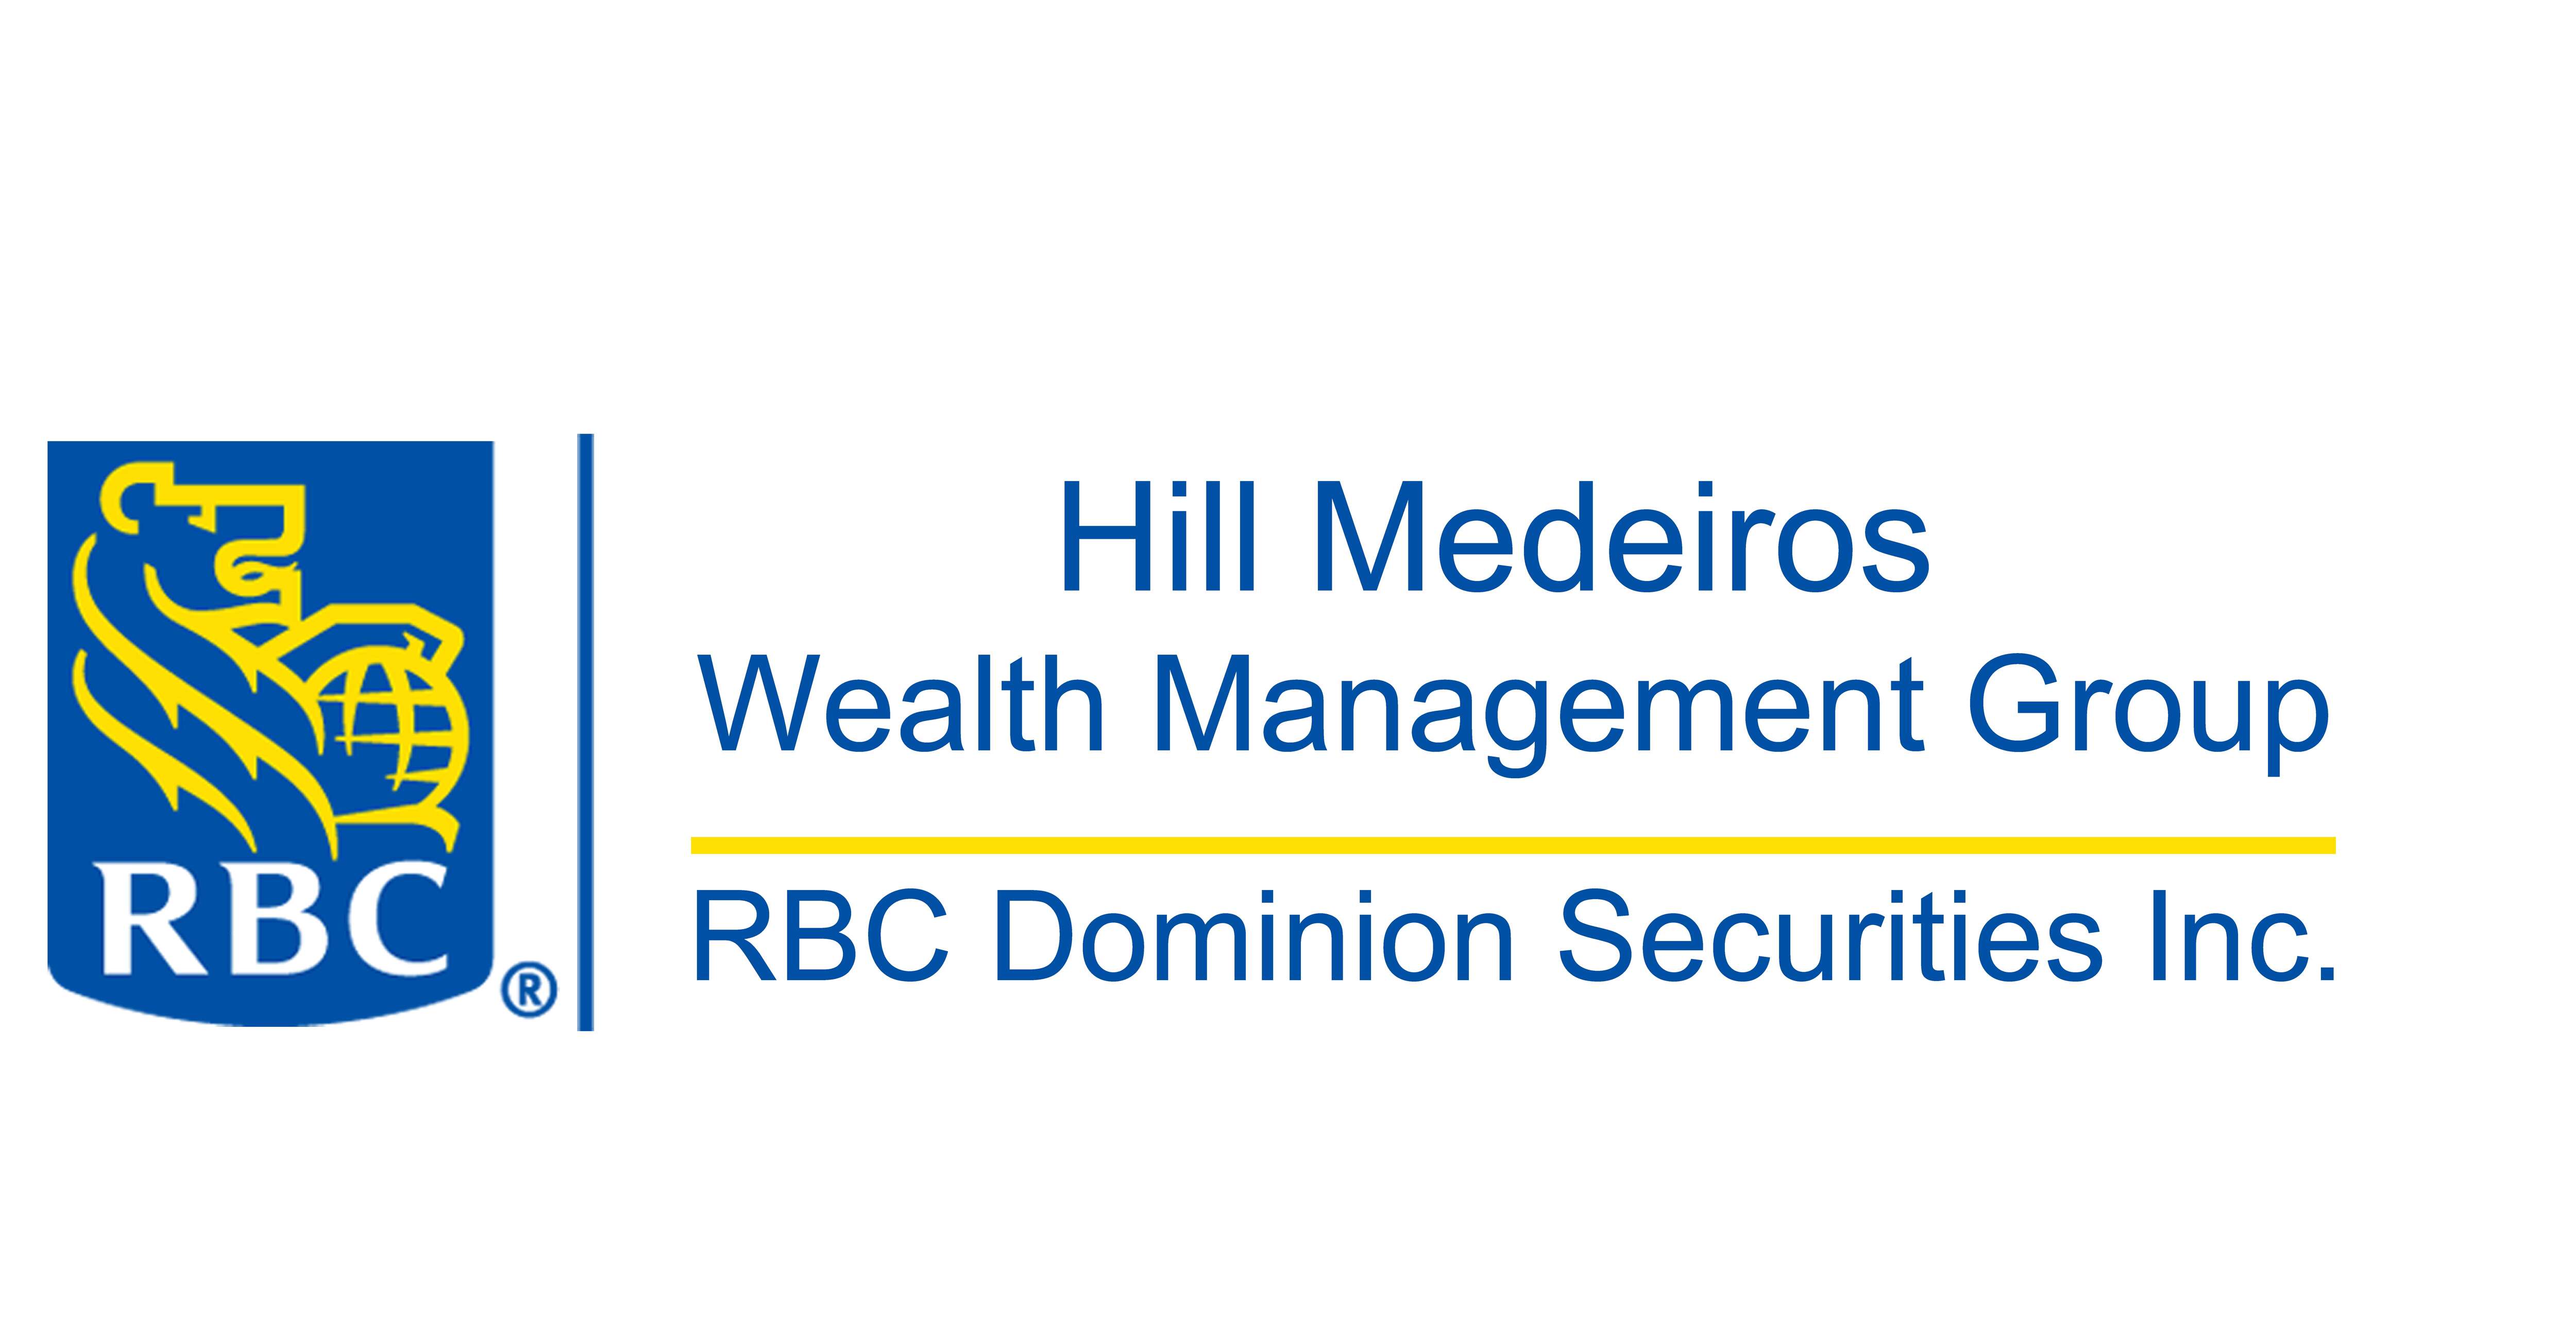 Hill Medeiros Wealth Management Group